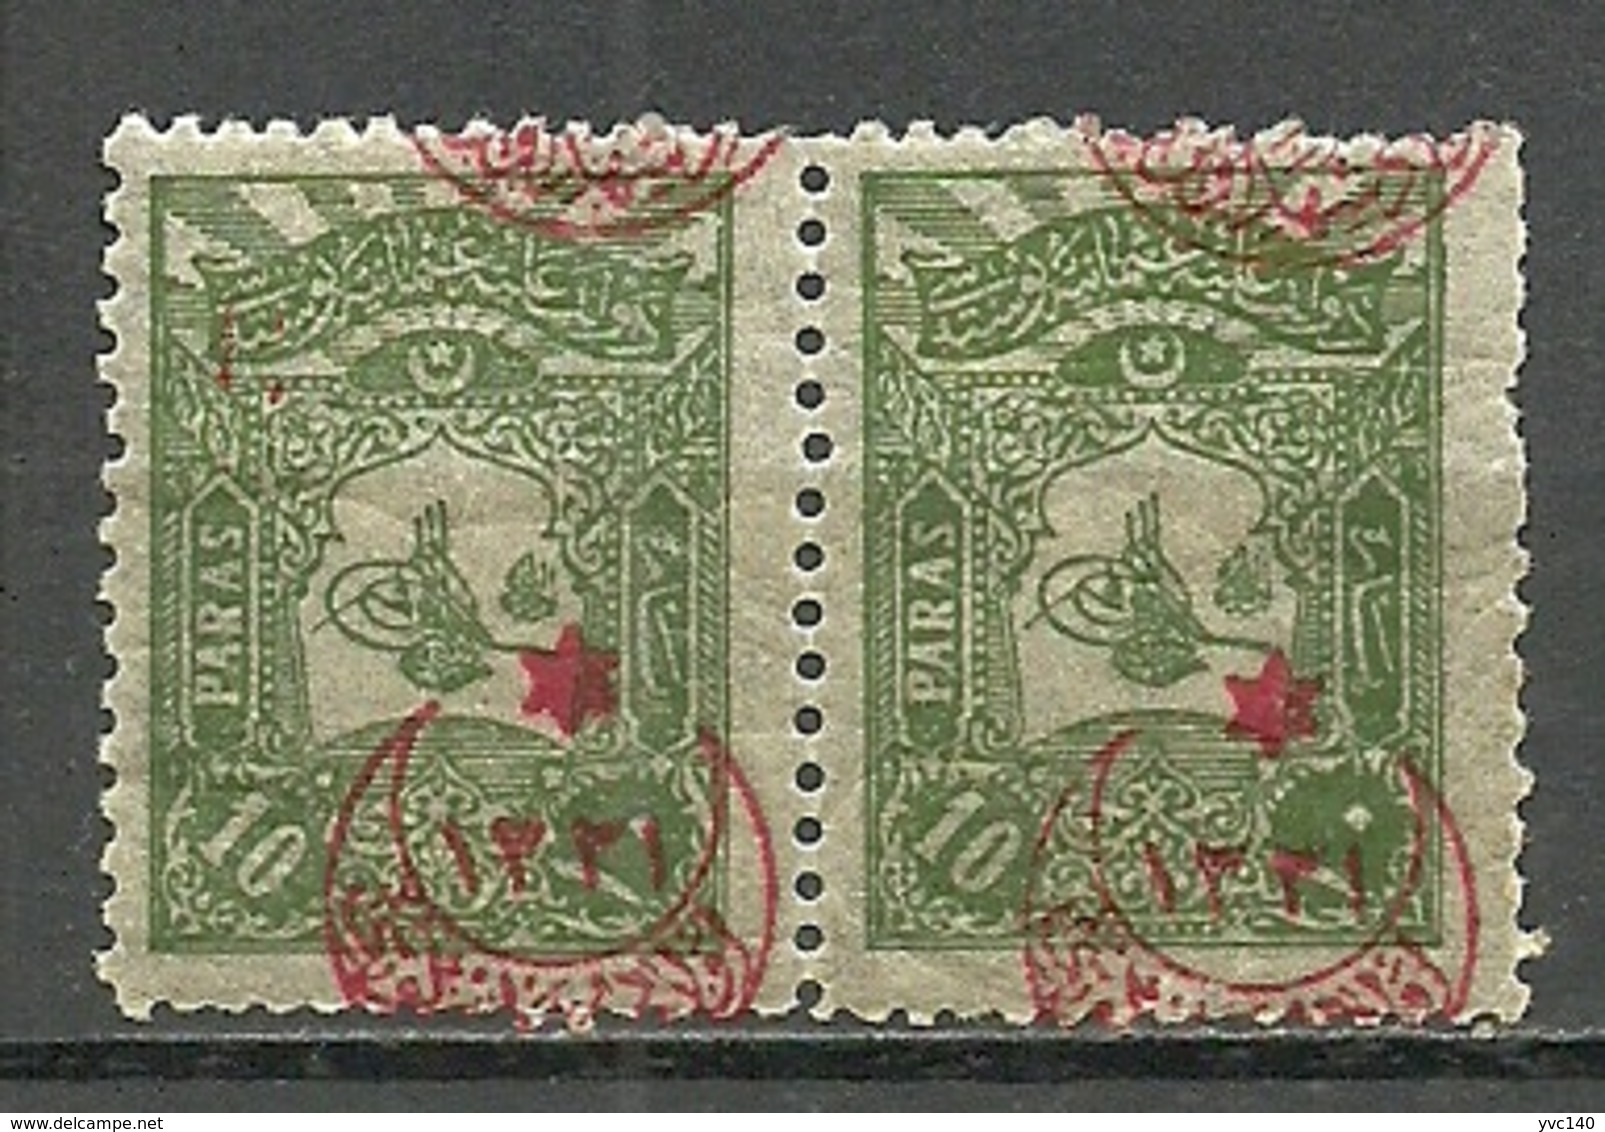 Turkey; 1915 Overprinted War Issue Stamp 10 P. ERROR "Misplaced Overprint" - Unused Stamps